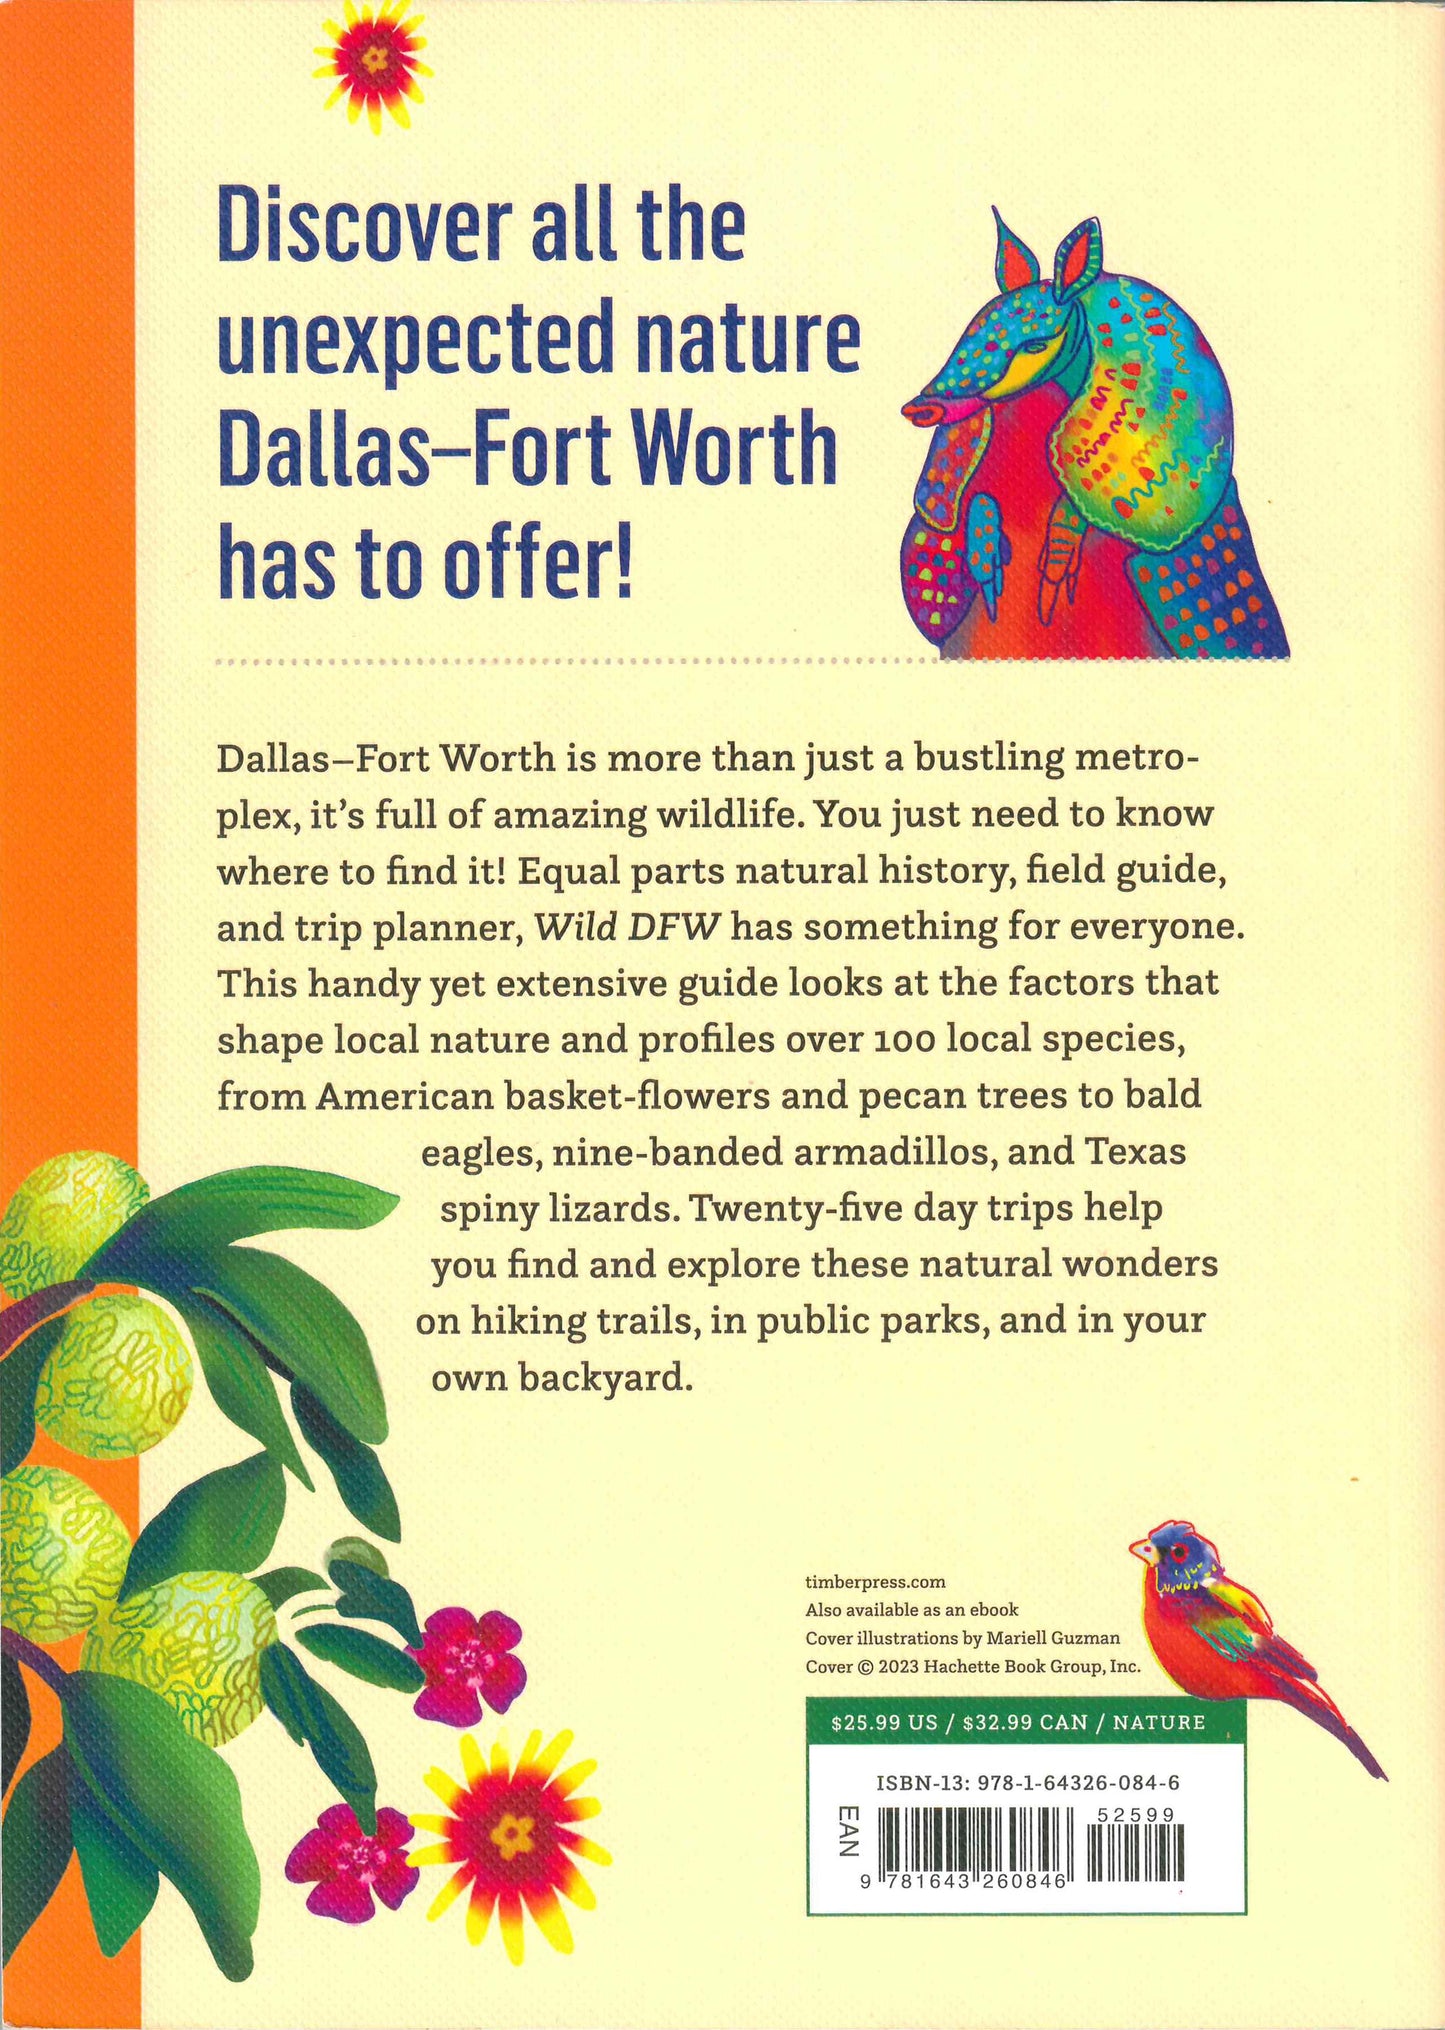 Wild DFW: Explore the Amazing Nature in and Around Dallas- Fort Worth